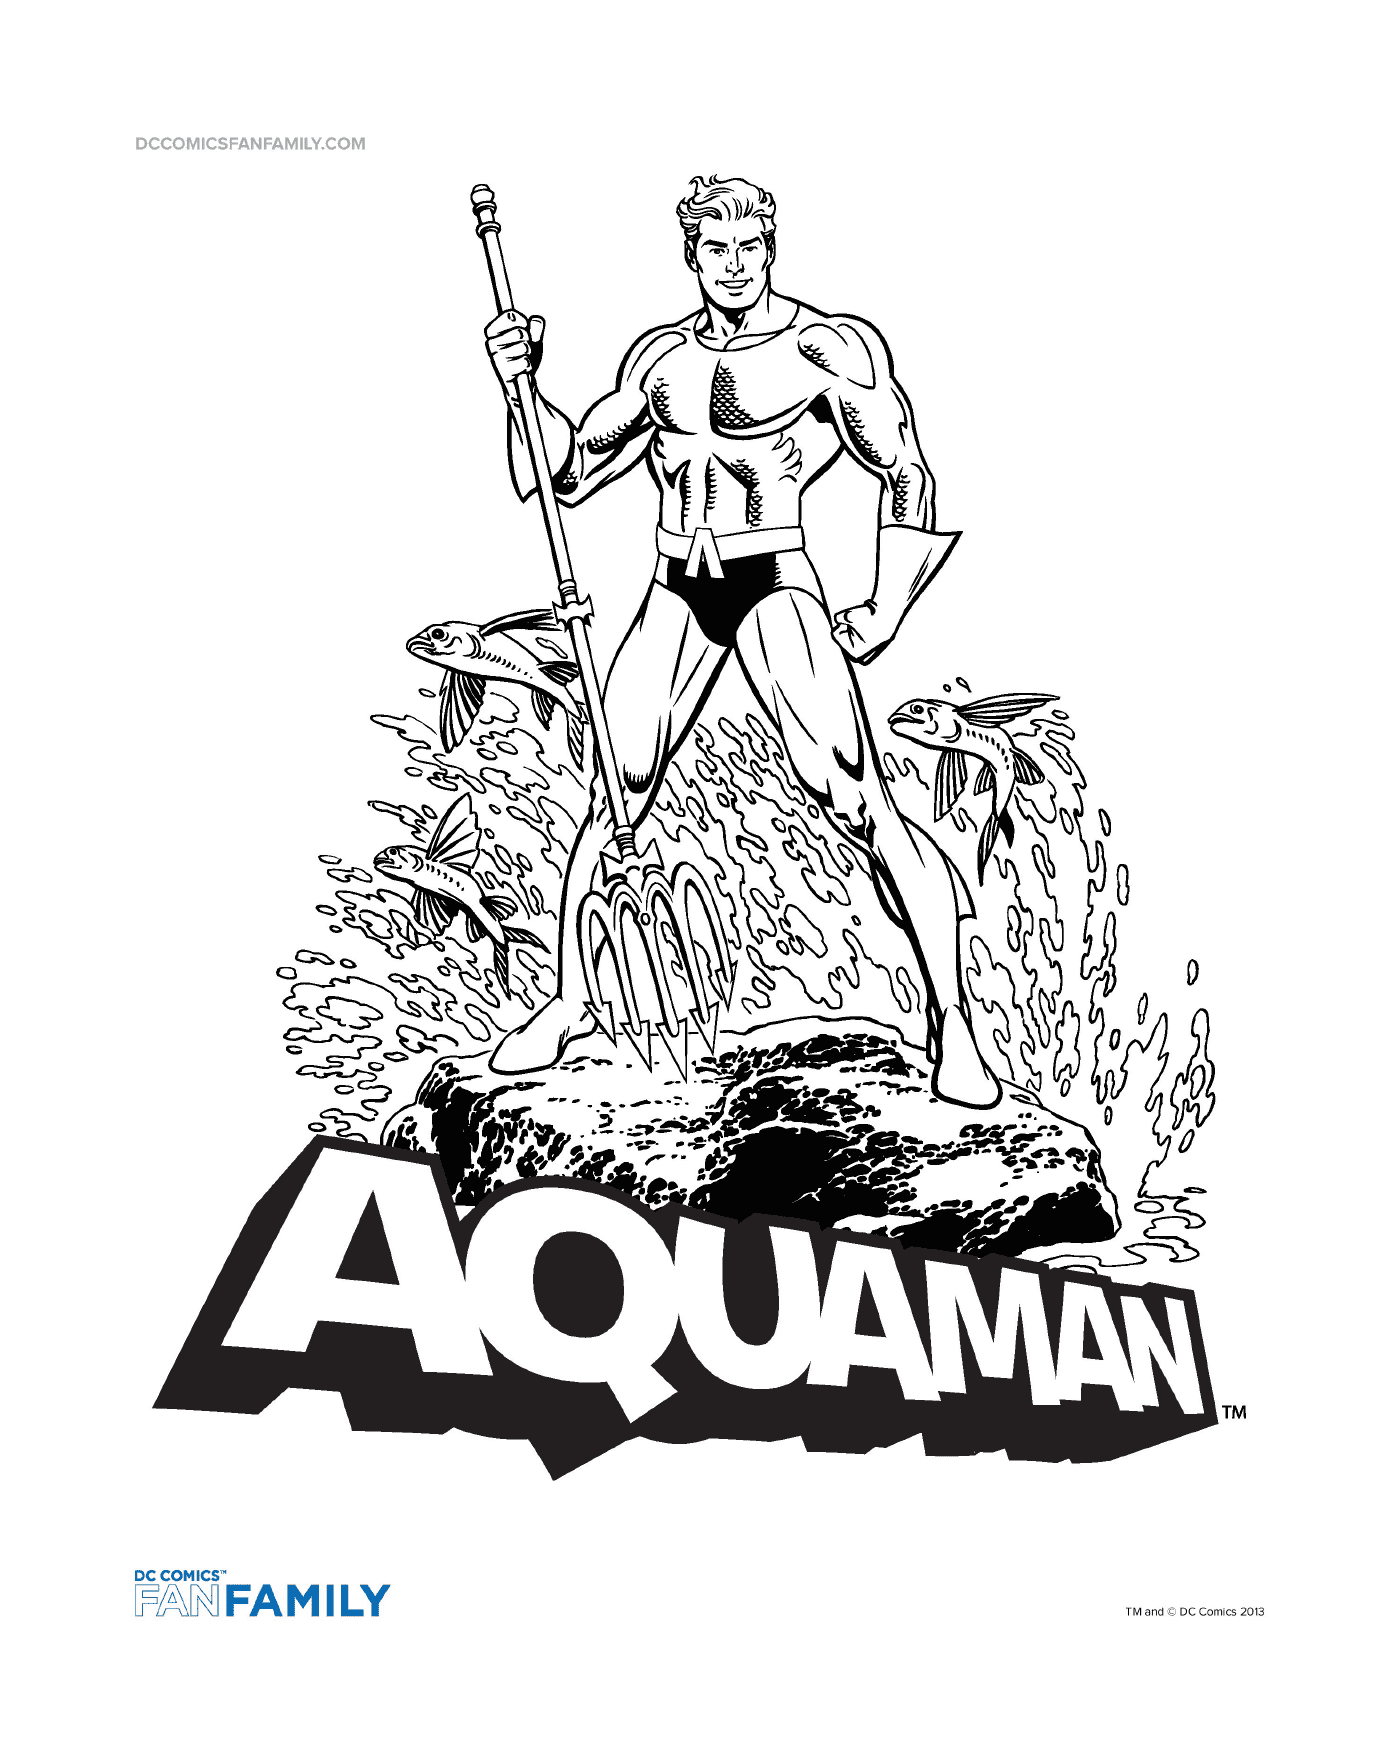   Aquaman tenant une lance 